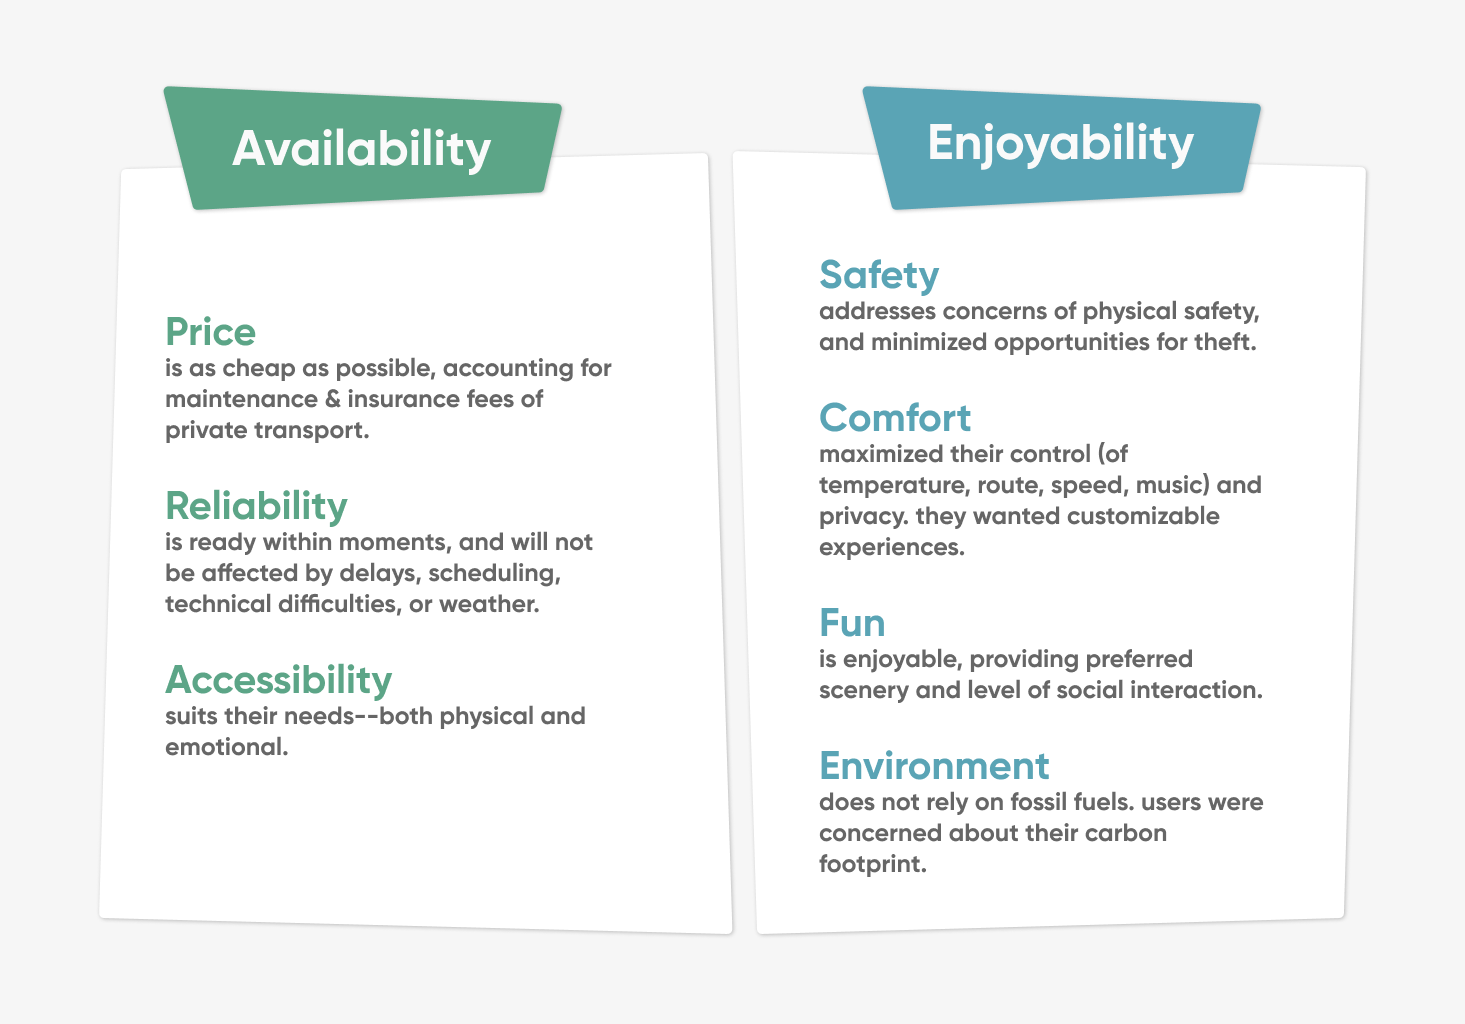 Table of Availability vs. Enjoyability